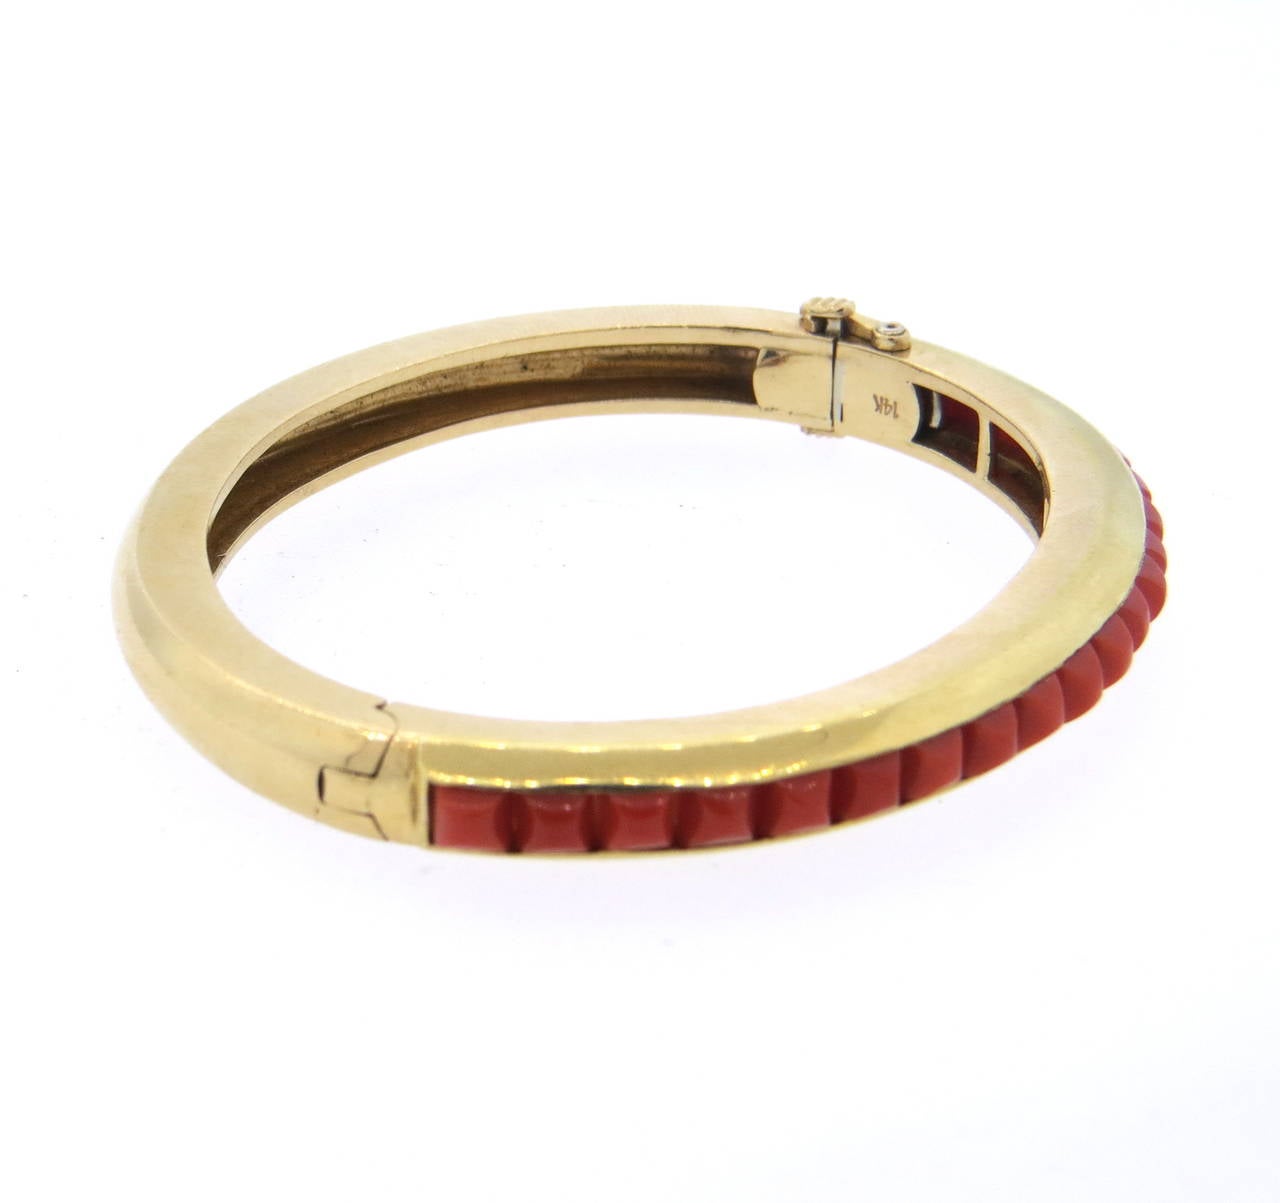 Mid Century 14k gold bangle bracelet, set with suragloaf cut coral stones. Bracelet will fit up to 7